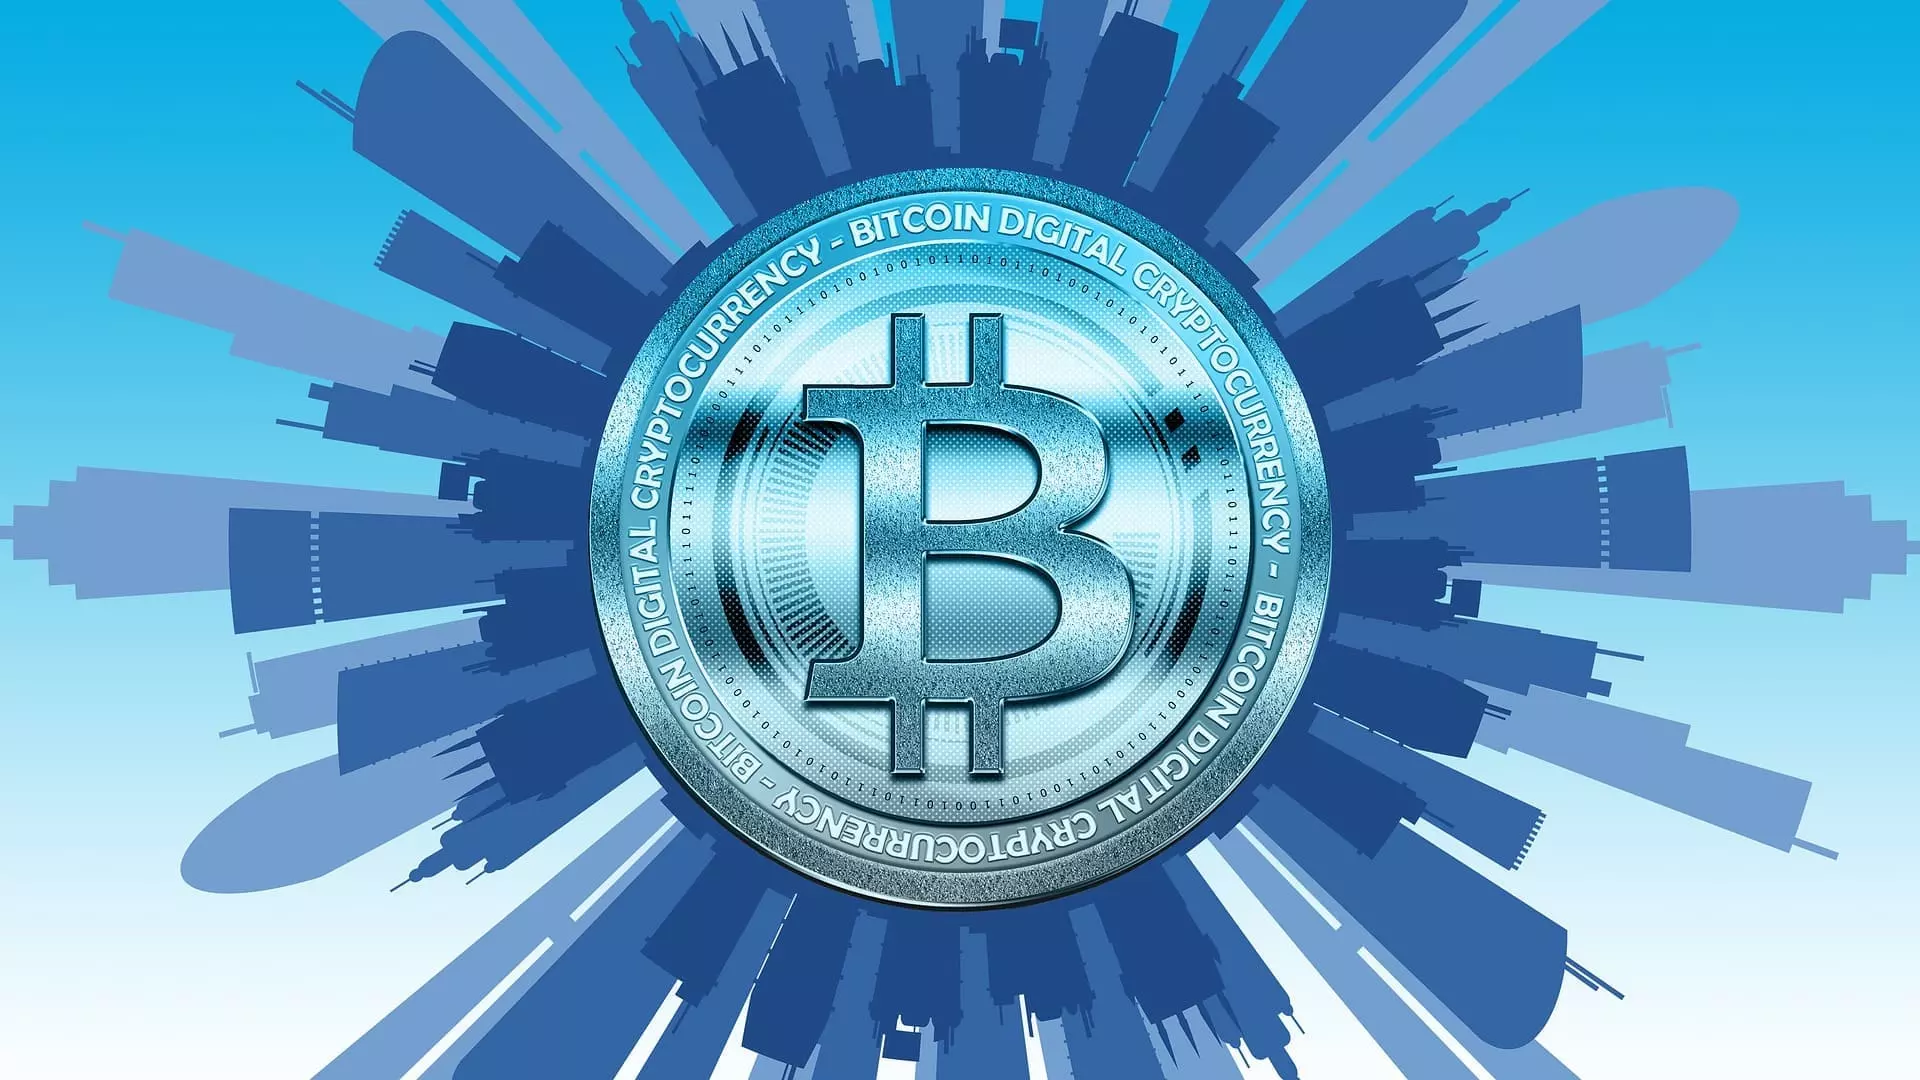 BItcoinBravado audit 2021 for online crypto traders